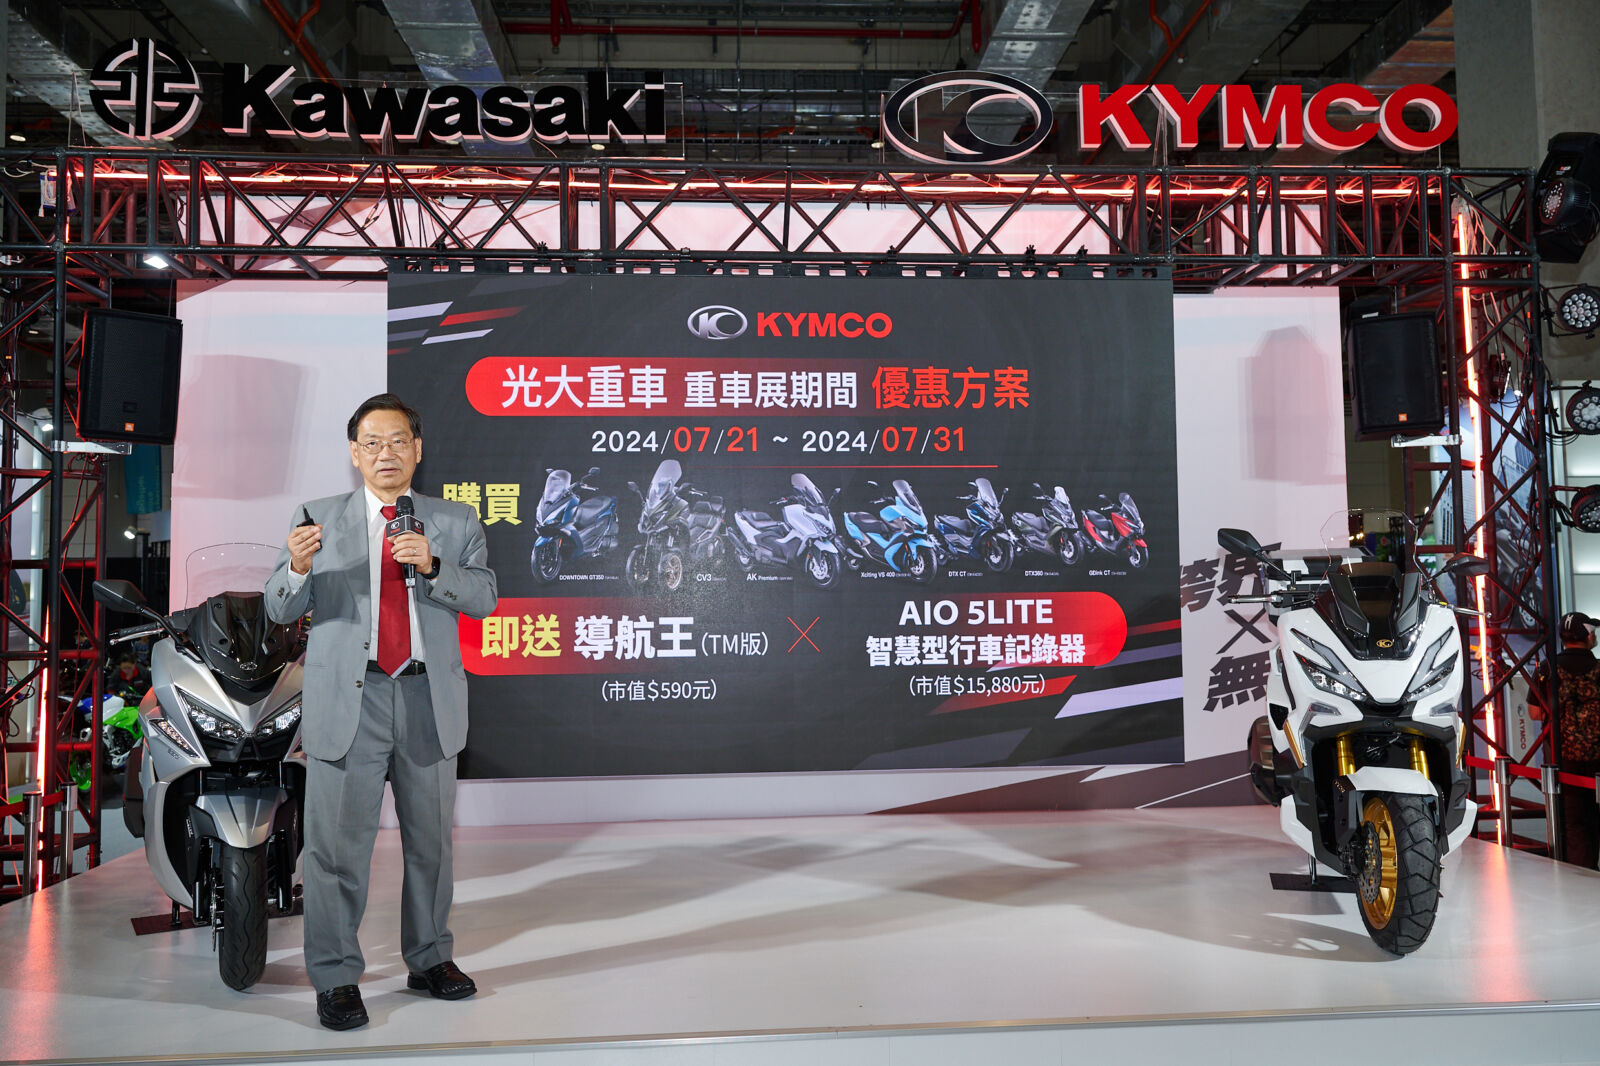 KYMCO重型速克達海外大放異彩 執行長柯俊斌宣布2新款將進軍台灣 21